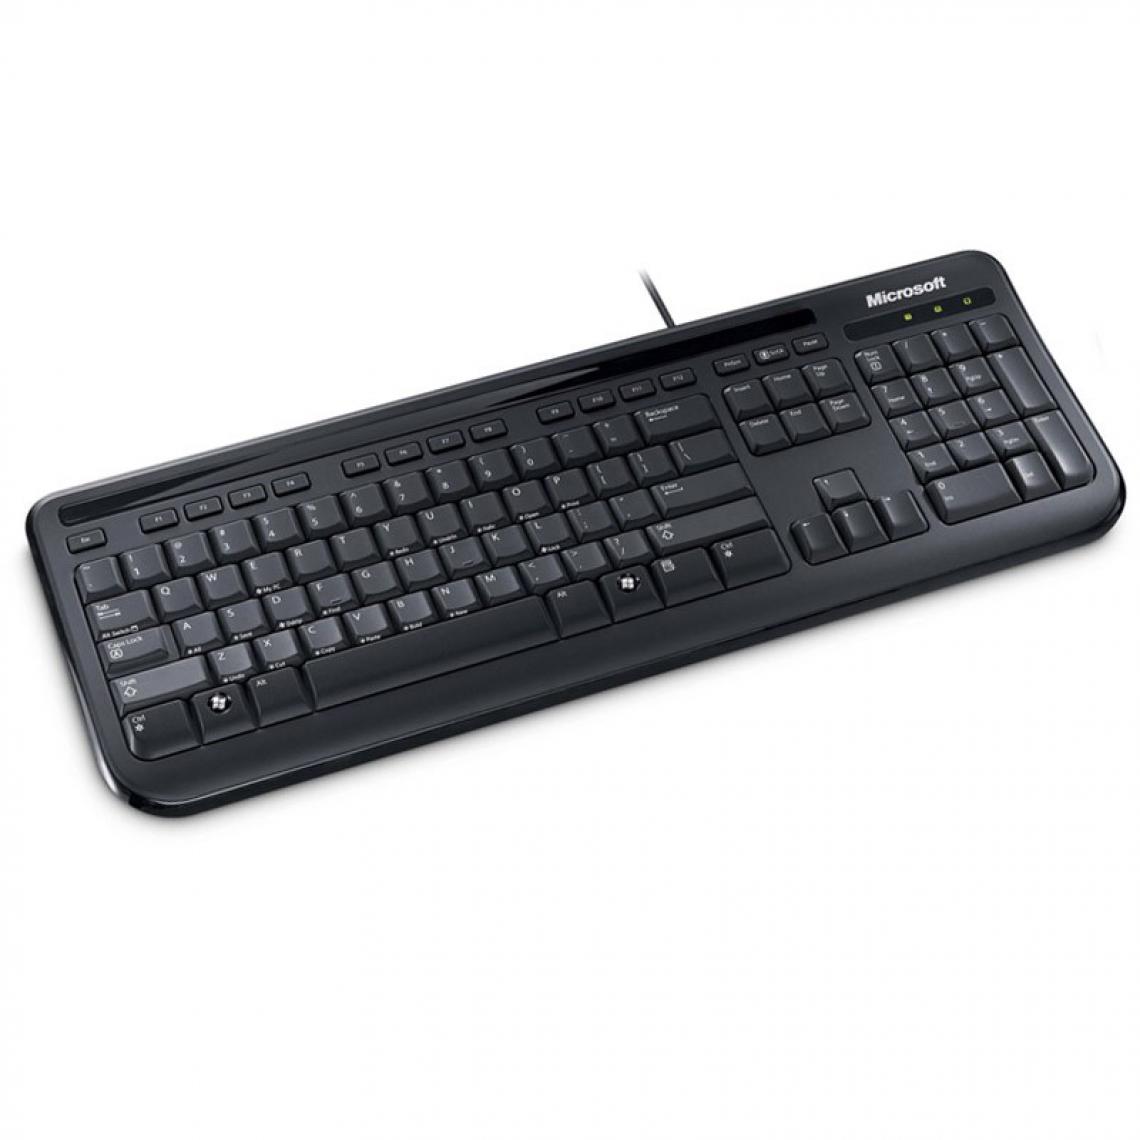 Microsoft - Clavier PC AZERTY Noir USB Microsoft Keyboard 400 1576 X823082-006 107 Touches - Clavier